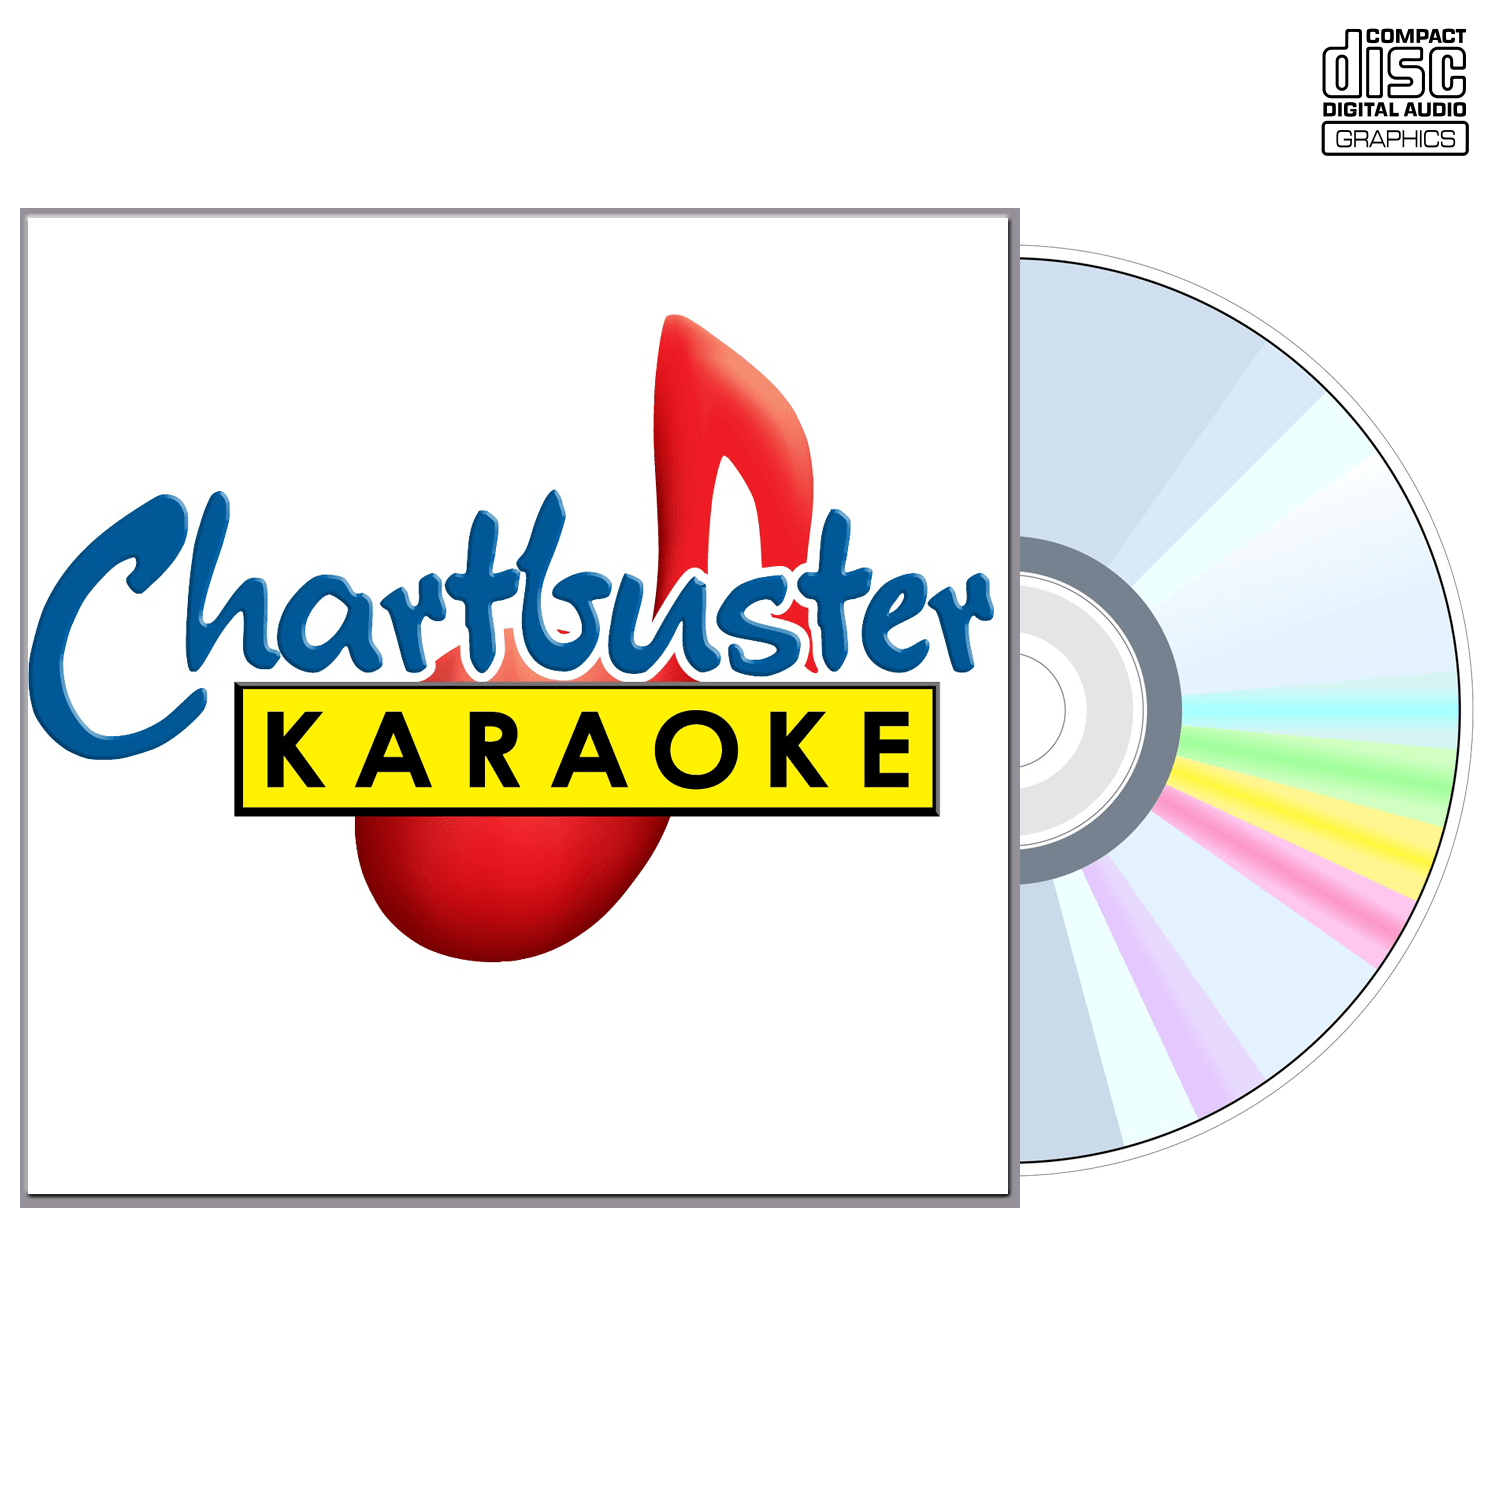 Usher Vol 1 - CD+G - Chartbuster Karaoke - Karaoke Home Entertainment